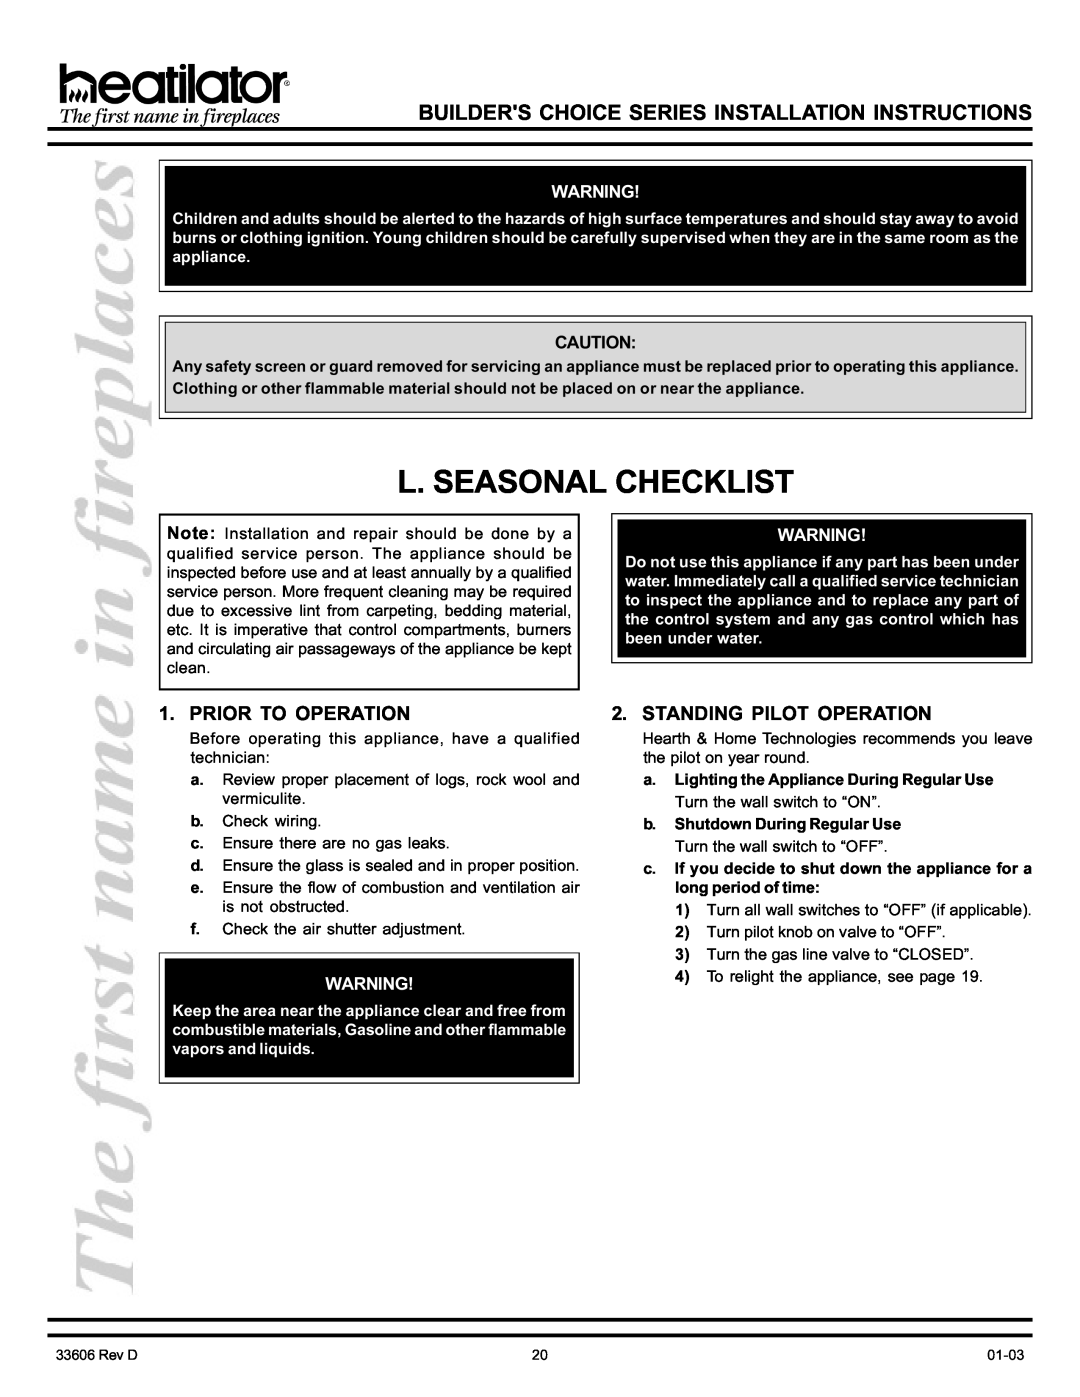 Heatiator BCDV36 manual L. Seasonal Checklist, Prior To Operation, Standing Pilot Operation 